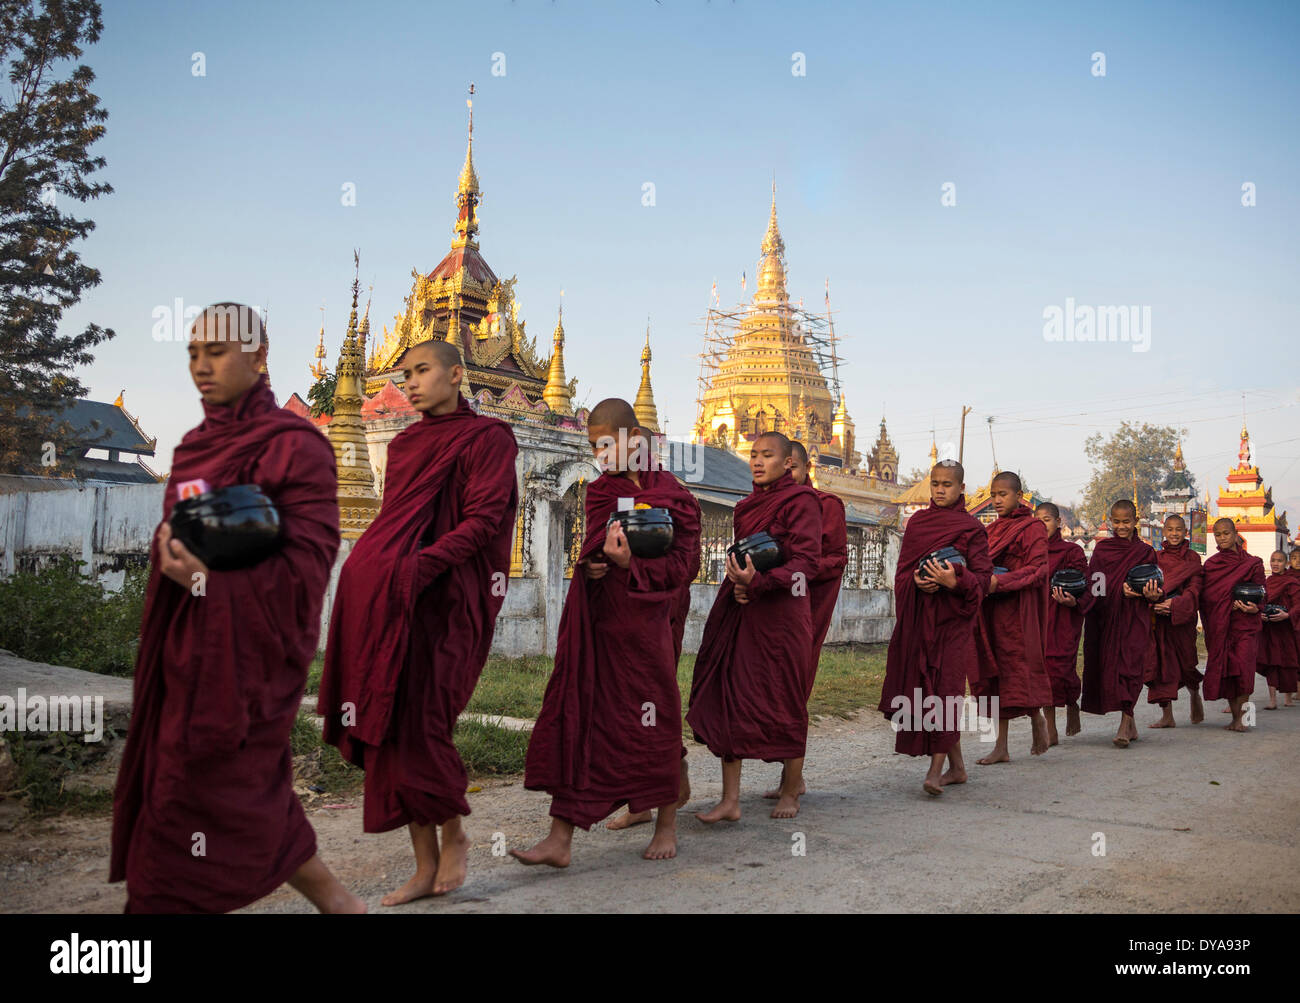 Nyaungshwe Myanmar Birmania Asia Budismo arquitectura colorida lago temprano por la mañana el monasterio de monjes religión templo touris rojo Foto de stock